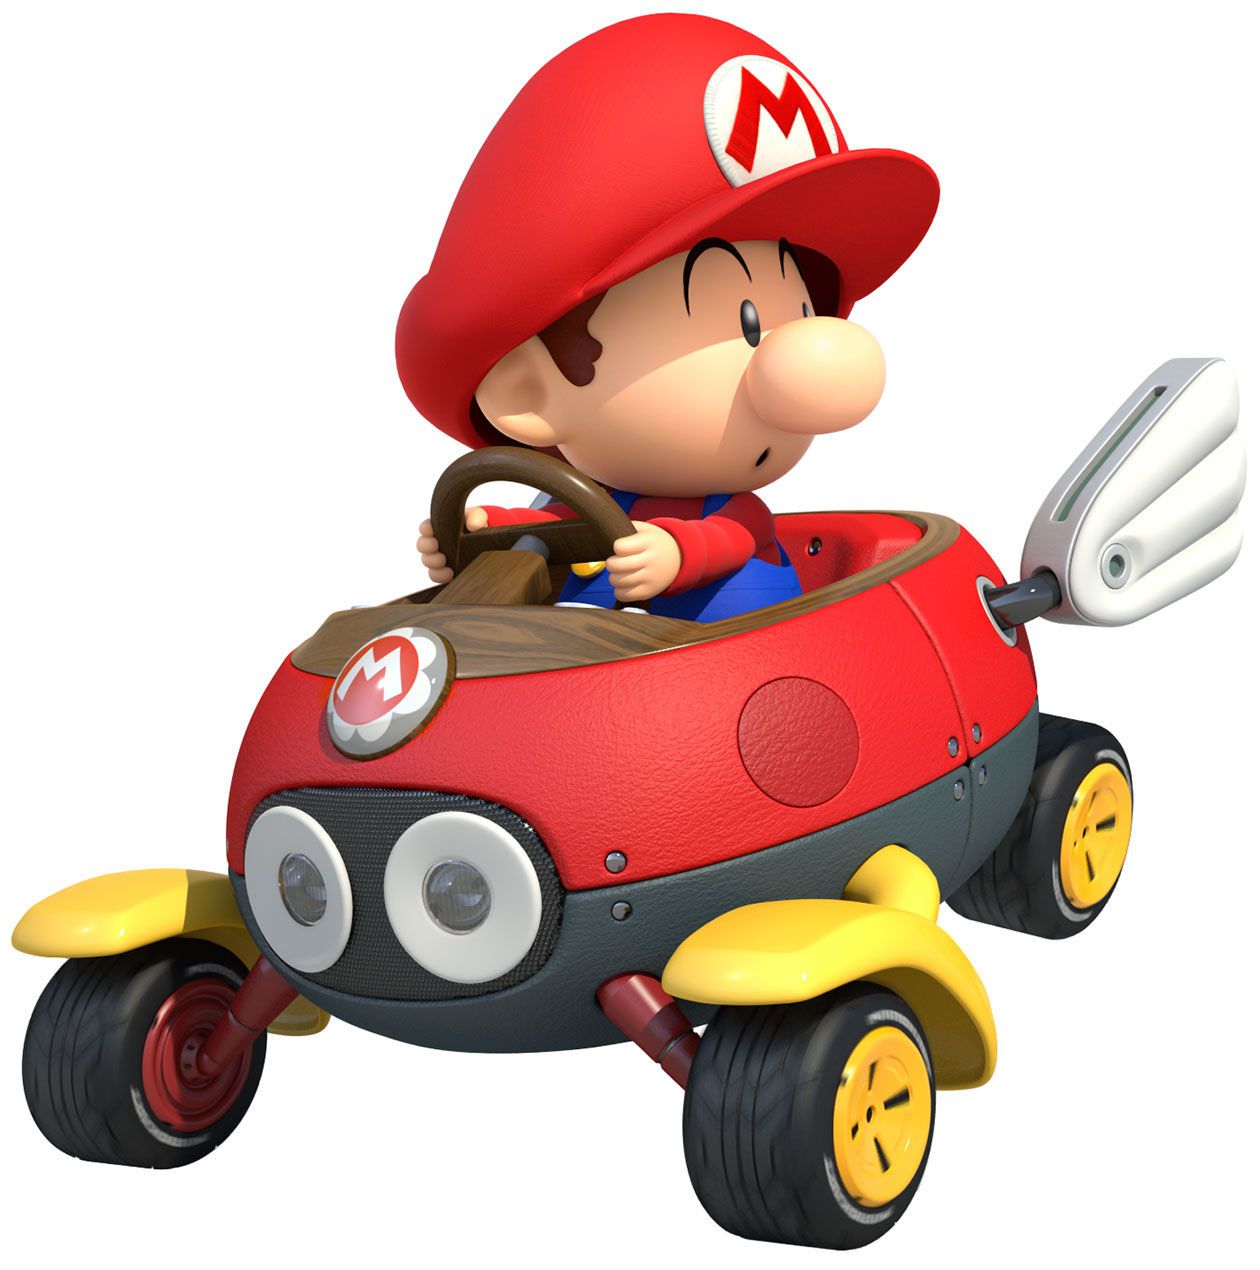 8 Mario Kart images 13